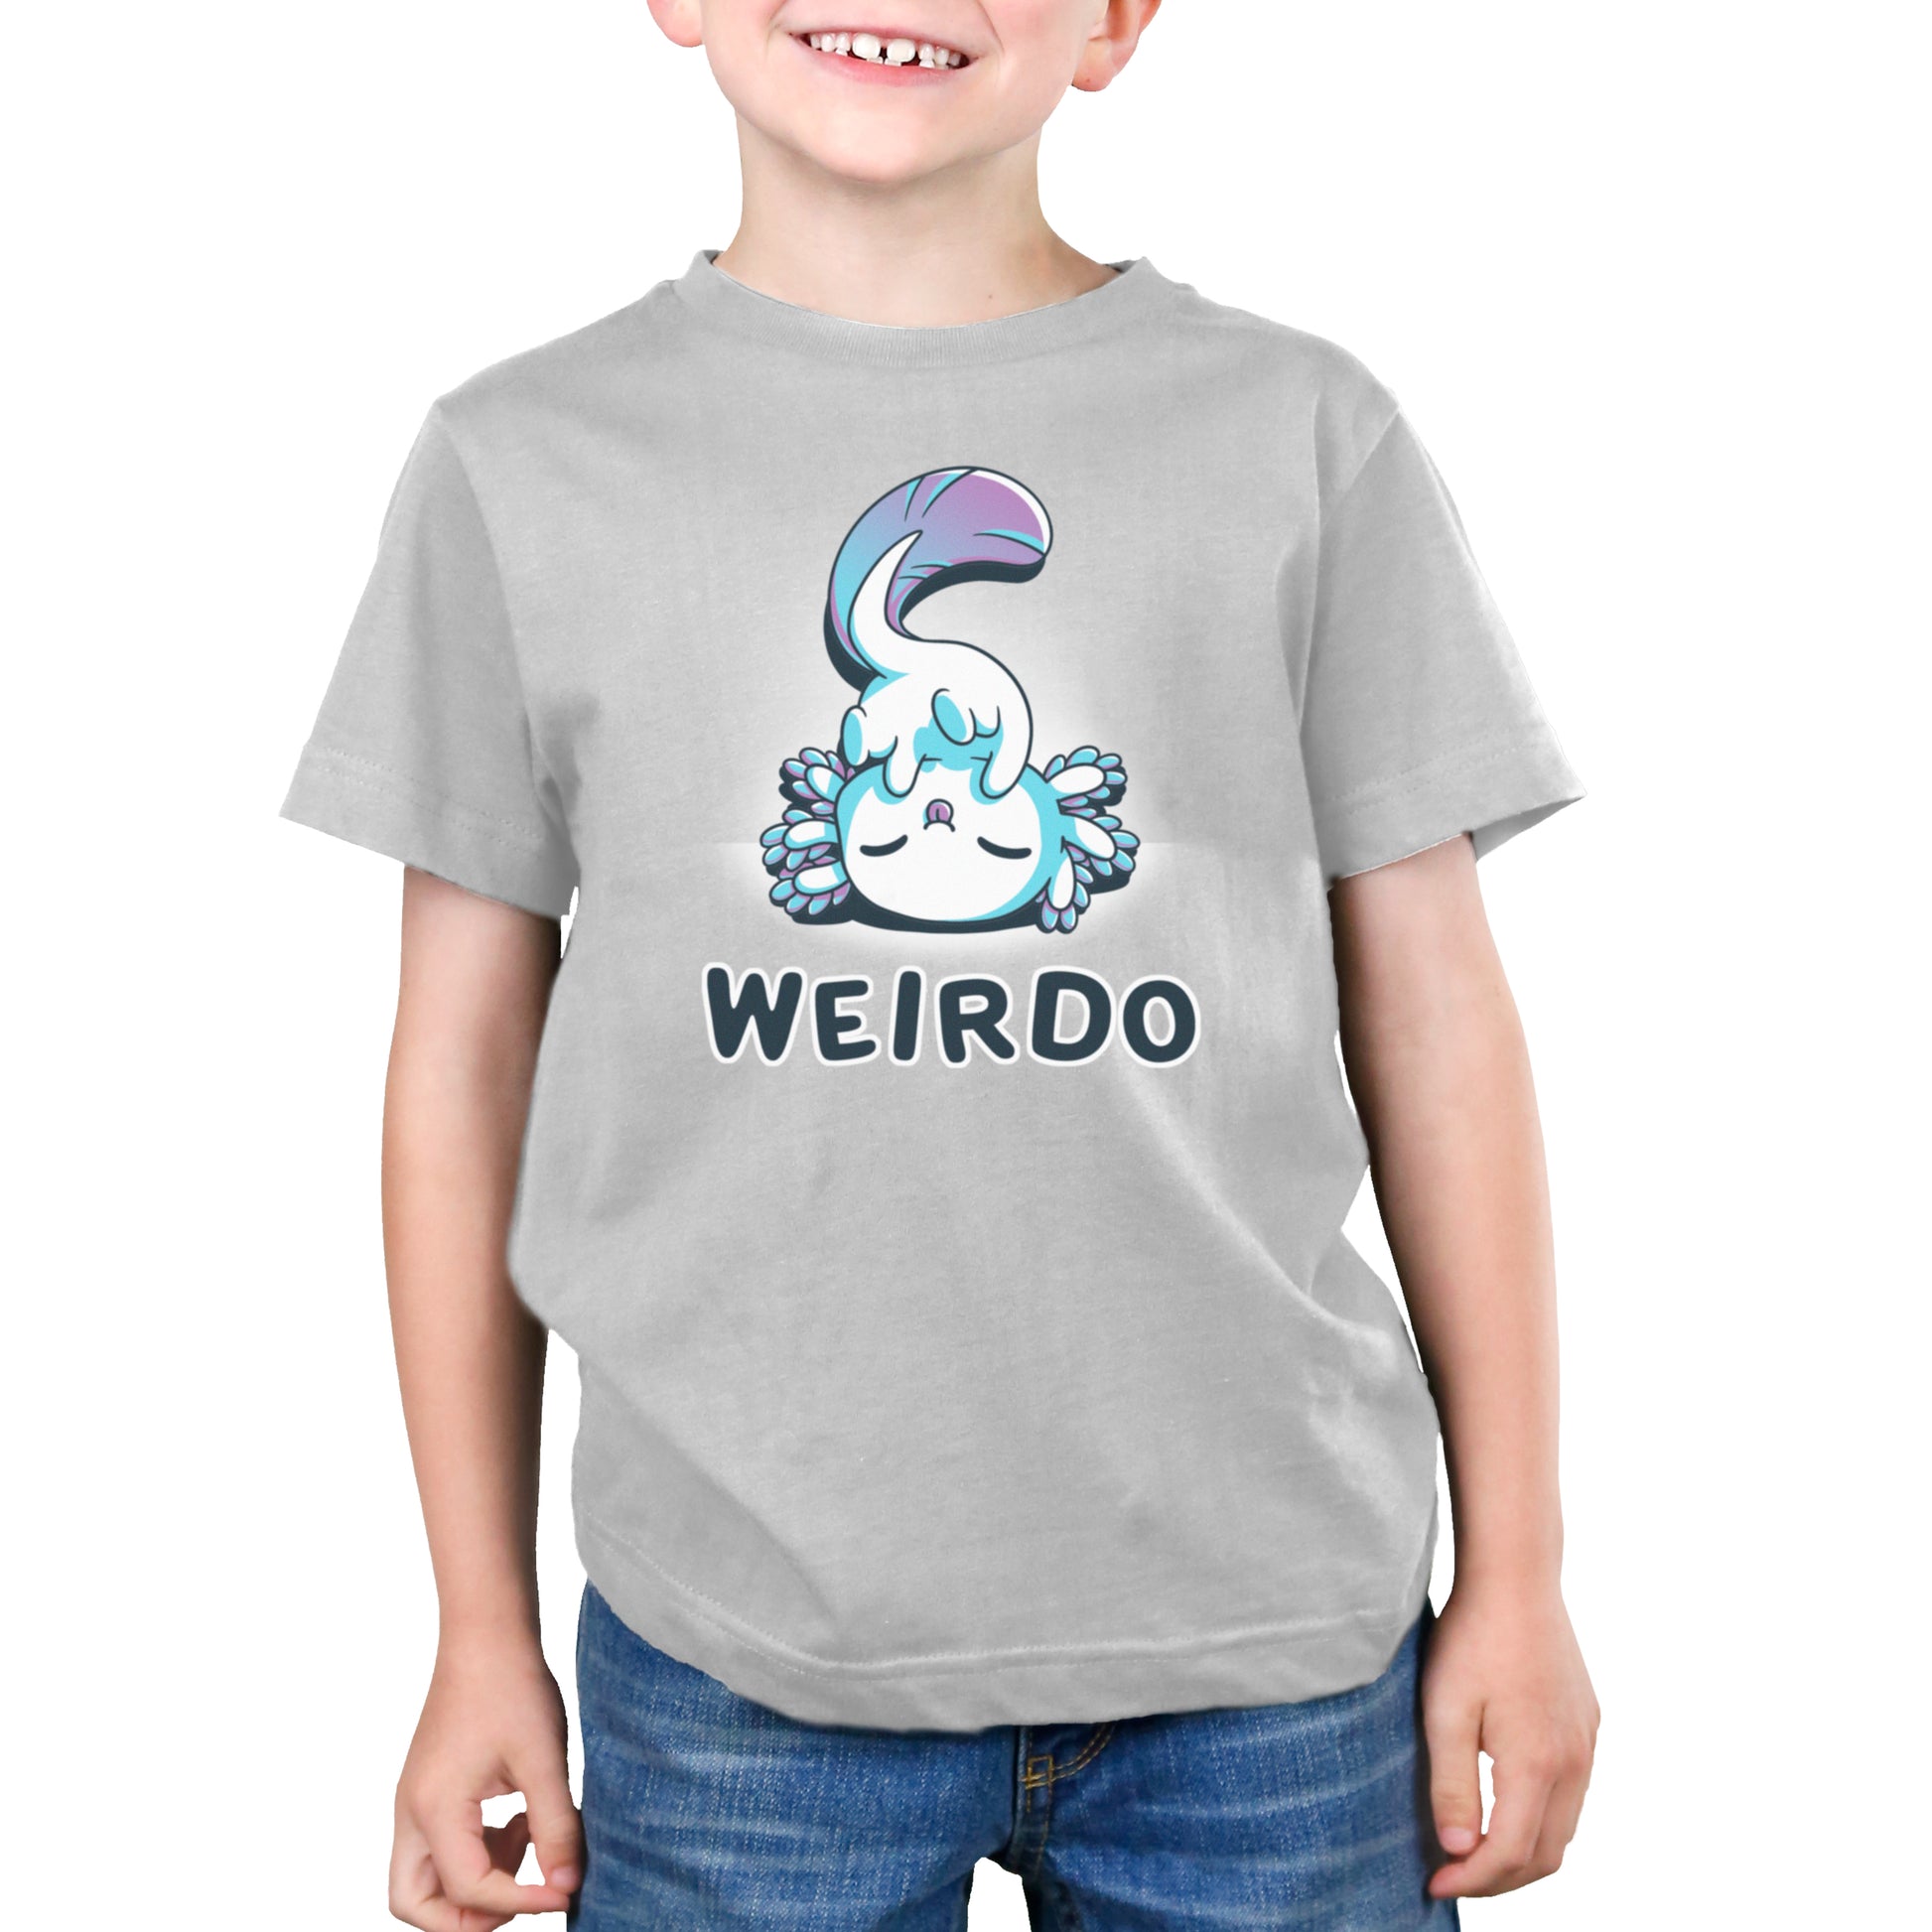 A young boy wearing a silver TeeTurtle t-shirt that says Weirdo.